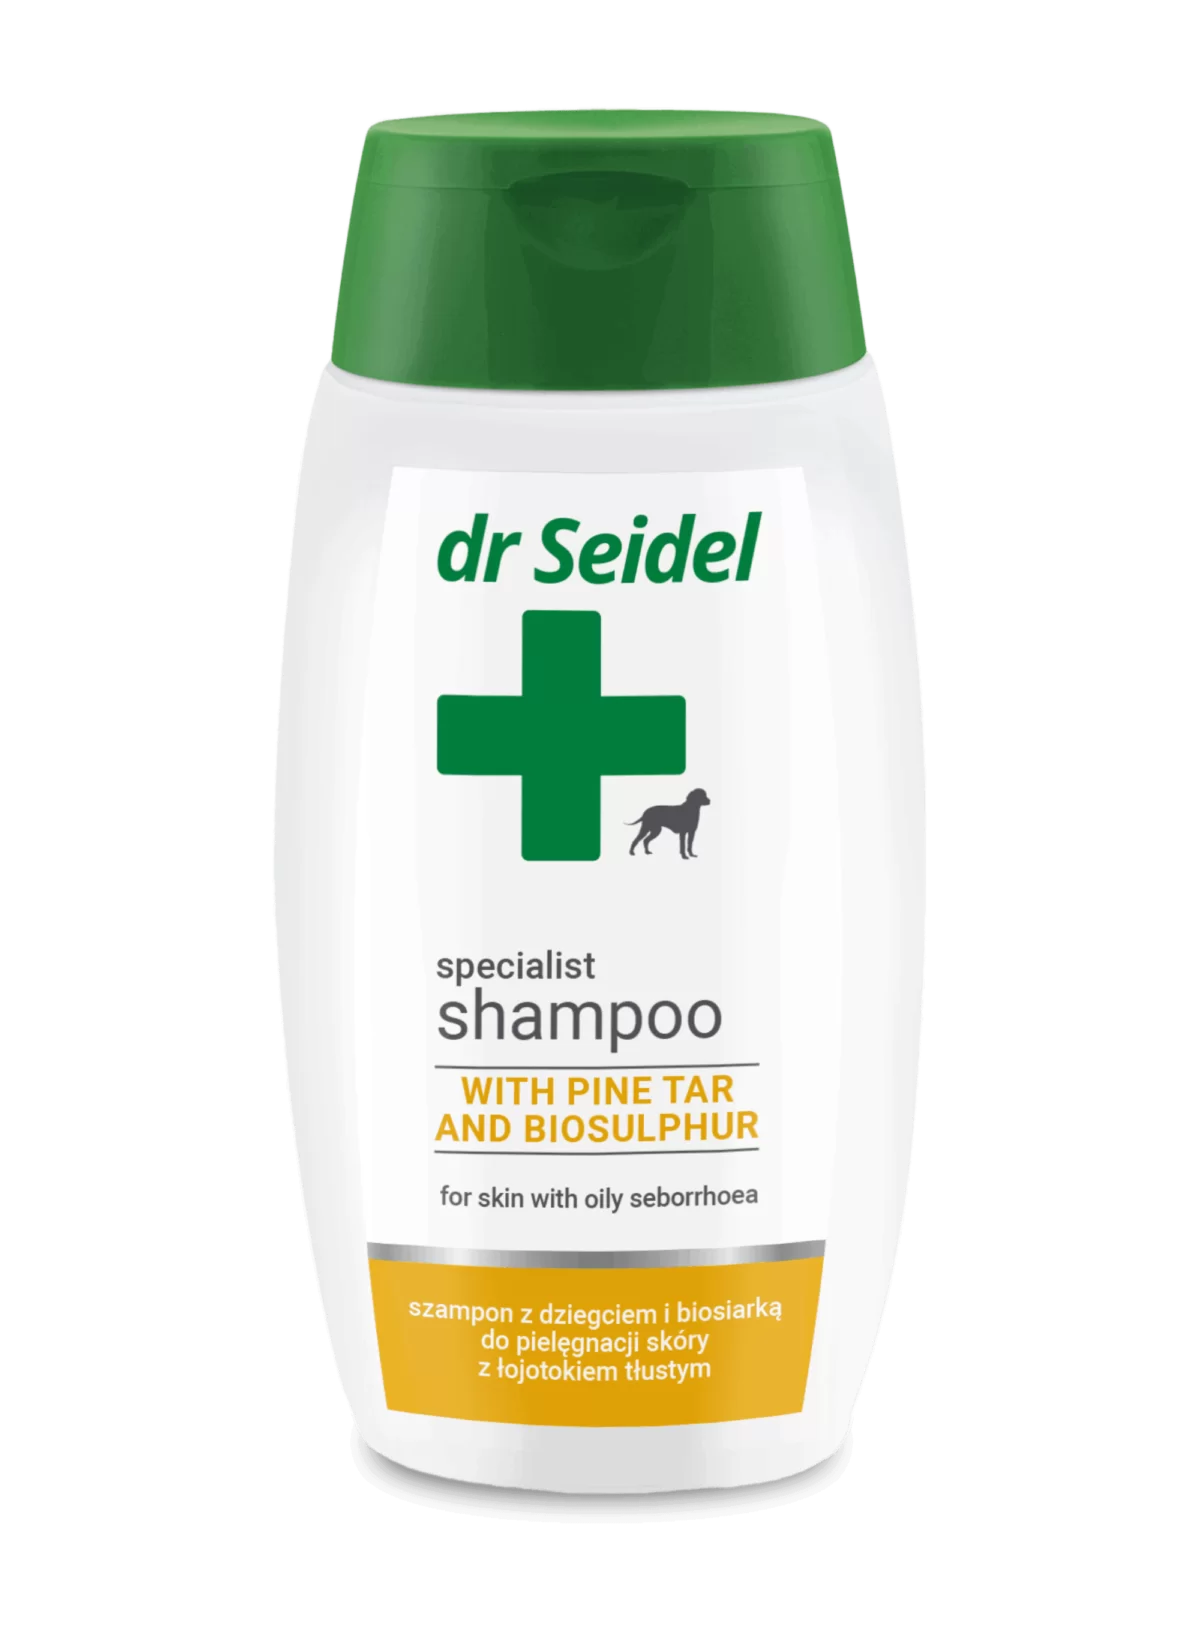 Dr Seidel shampoo met pijnboomteer en biozwavel